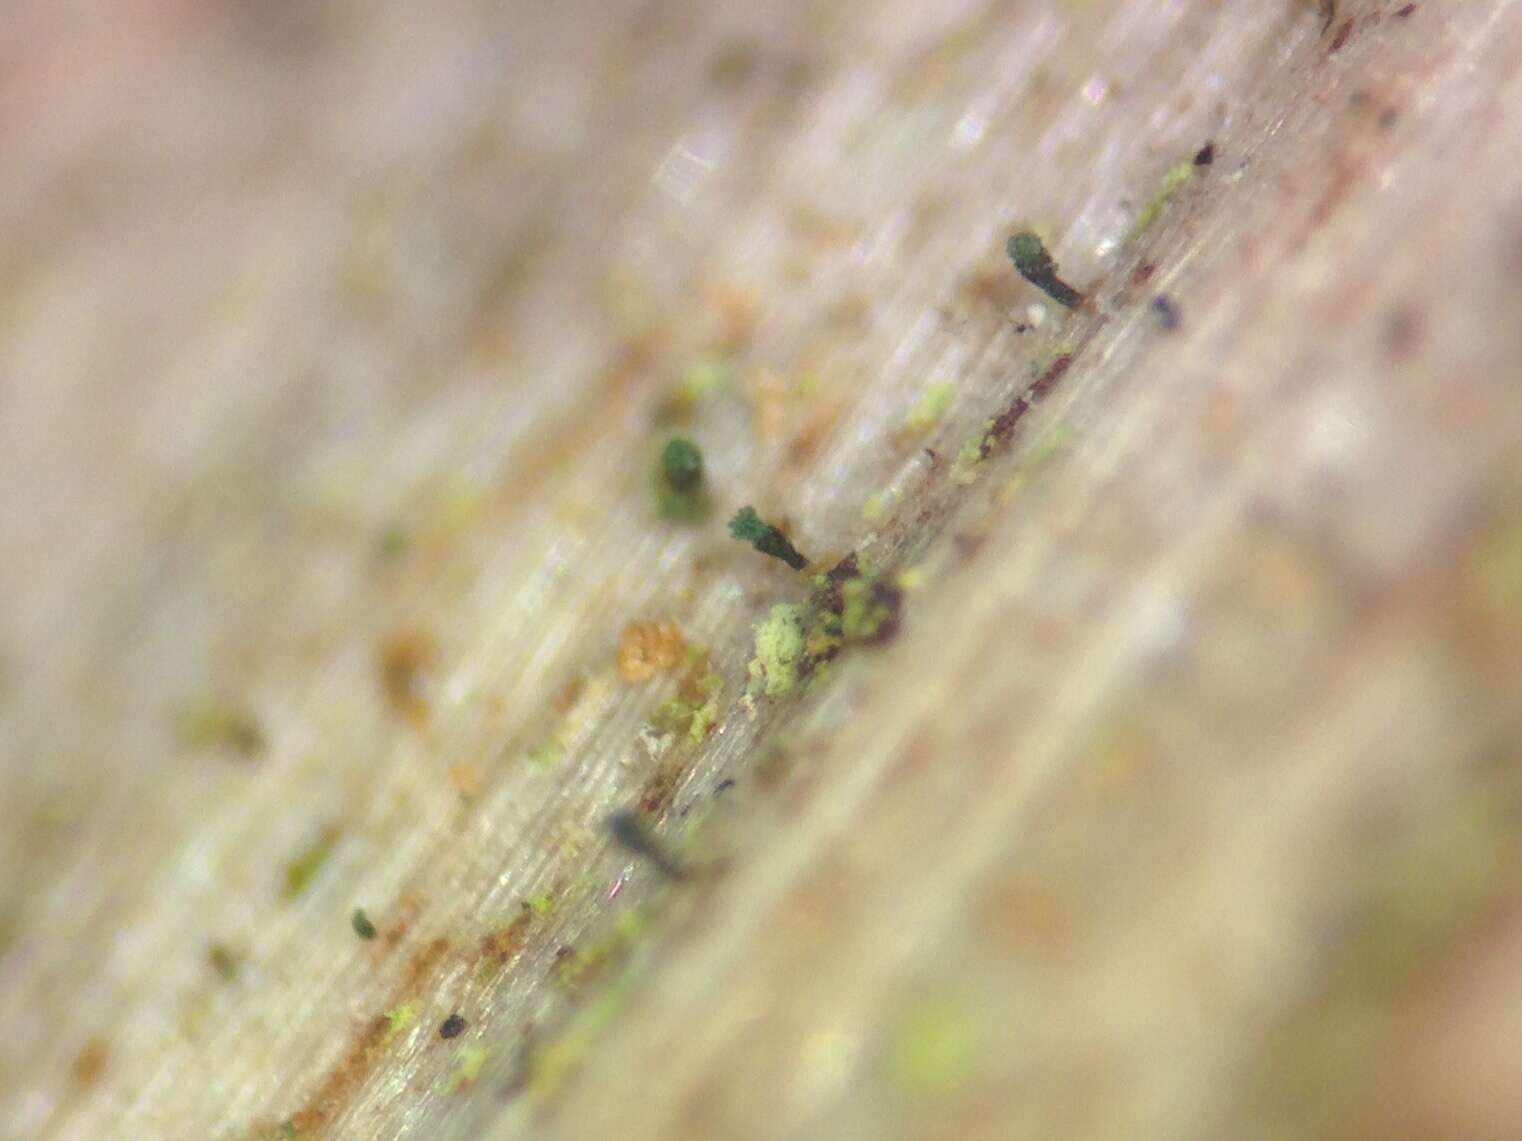 Image of Ahlner's microcalicium lichen